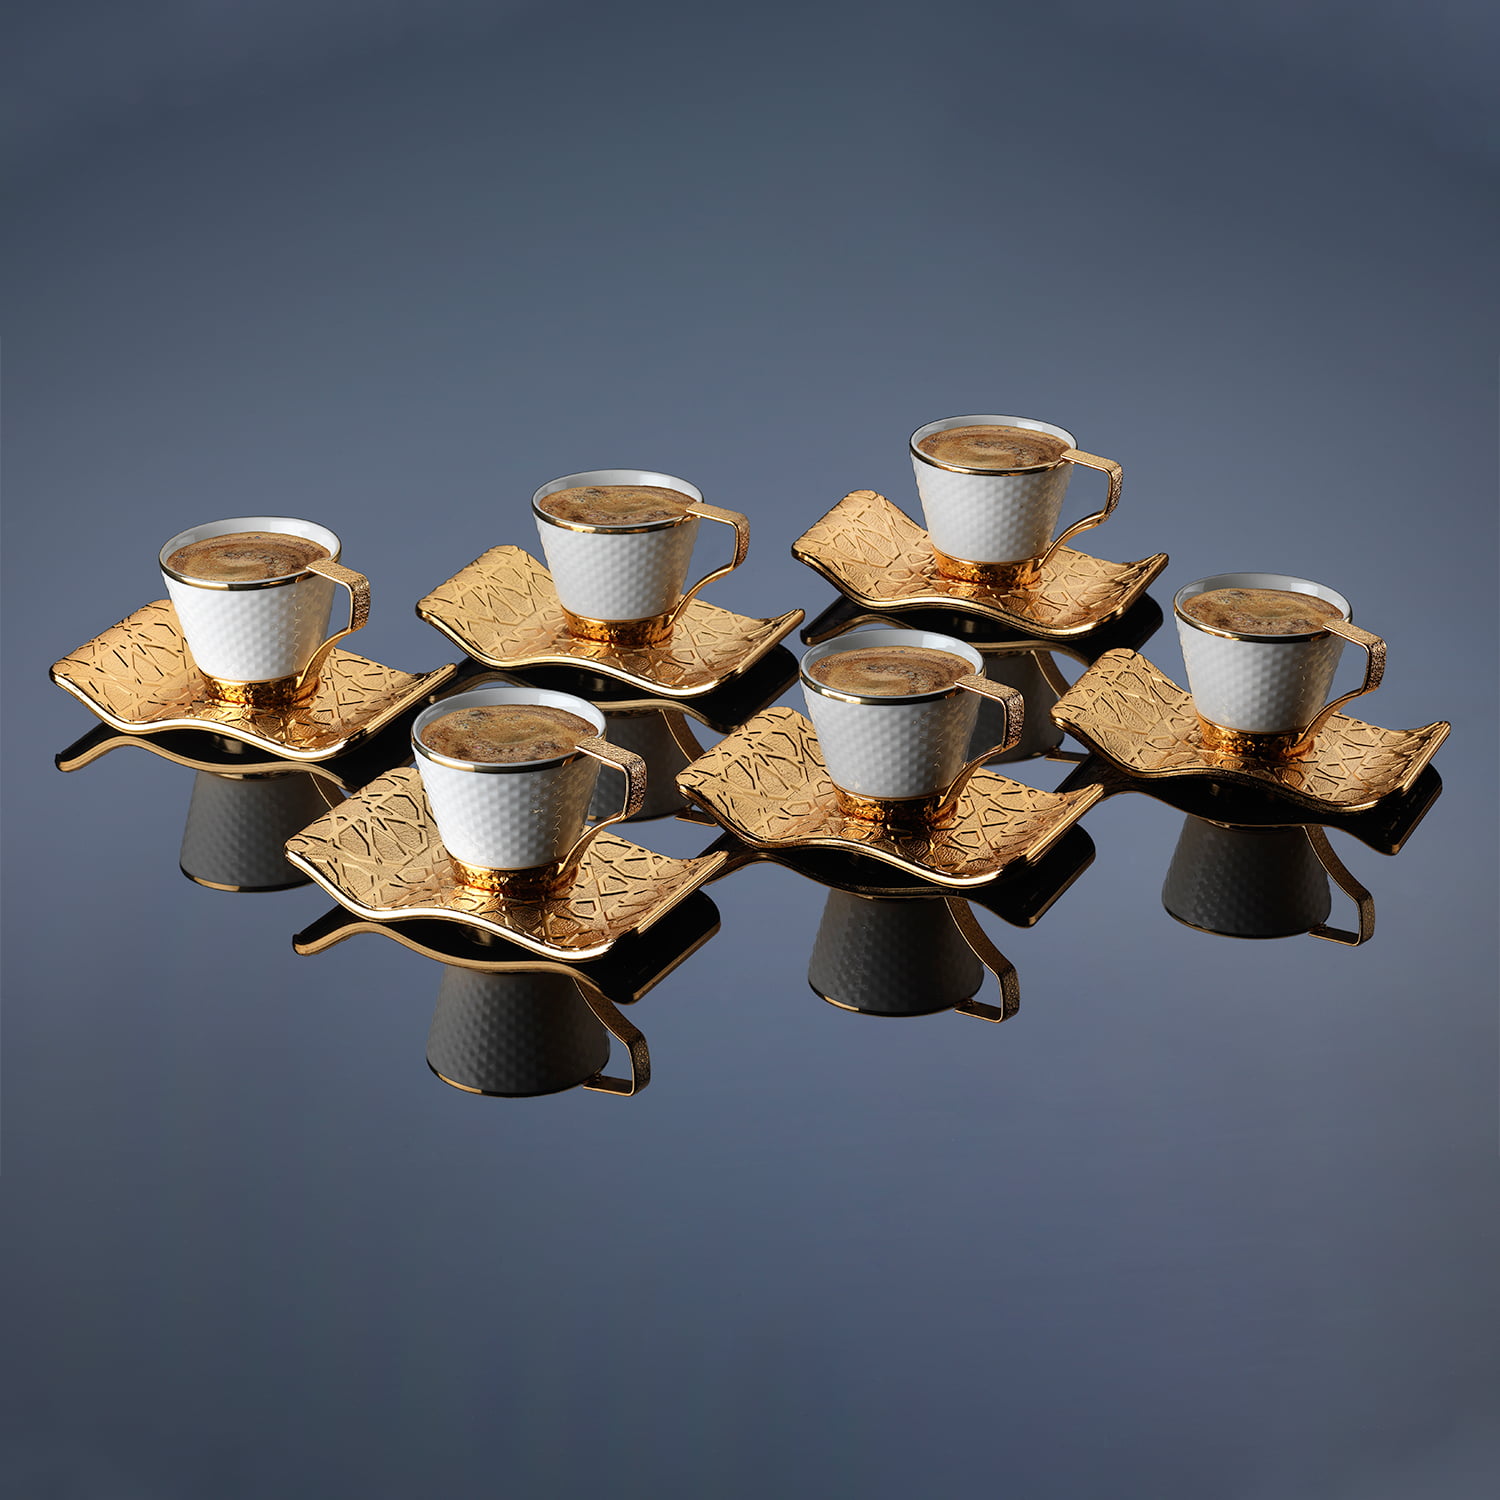 MIni Mugs Espresso Coffee Mug Cups Tea Cup Mugs Fancy Glaze